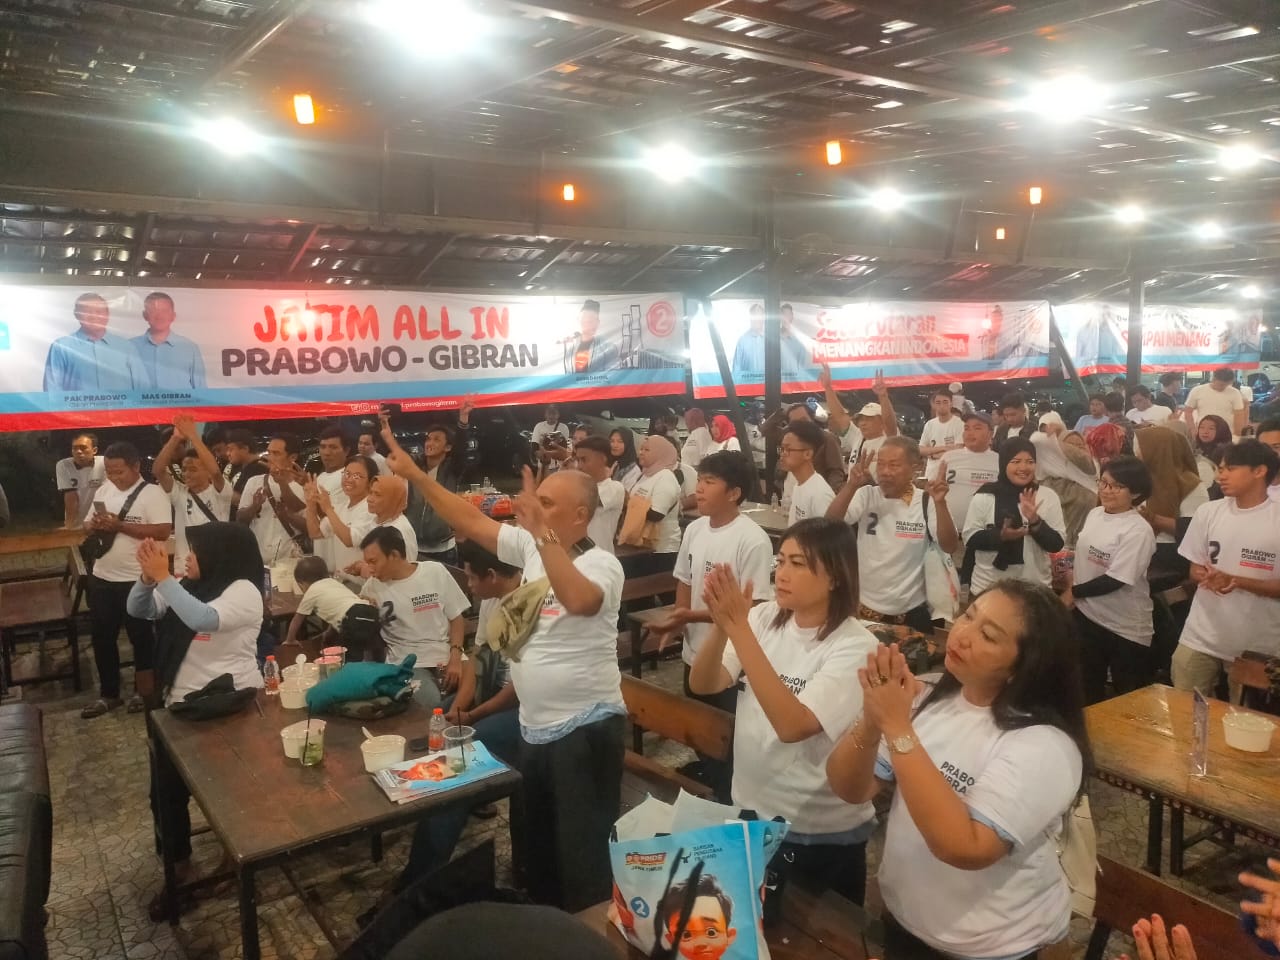 Gelar Apel Pemenangan dan Manifesto, Matahari Pagi Siap Memperkuat Kemenangan Prabowo-Gibran di Jawa Timur